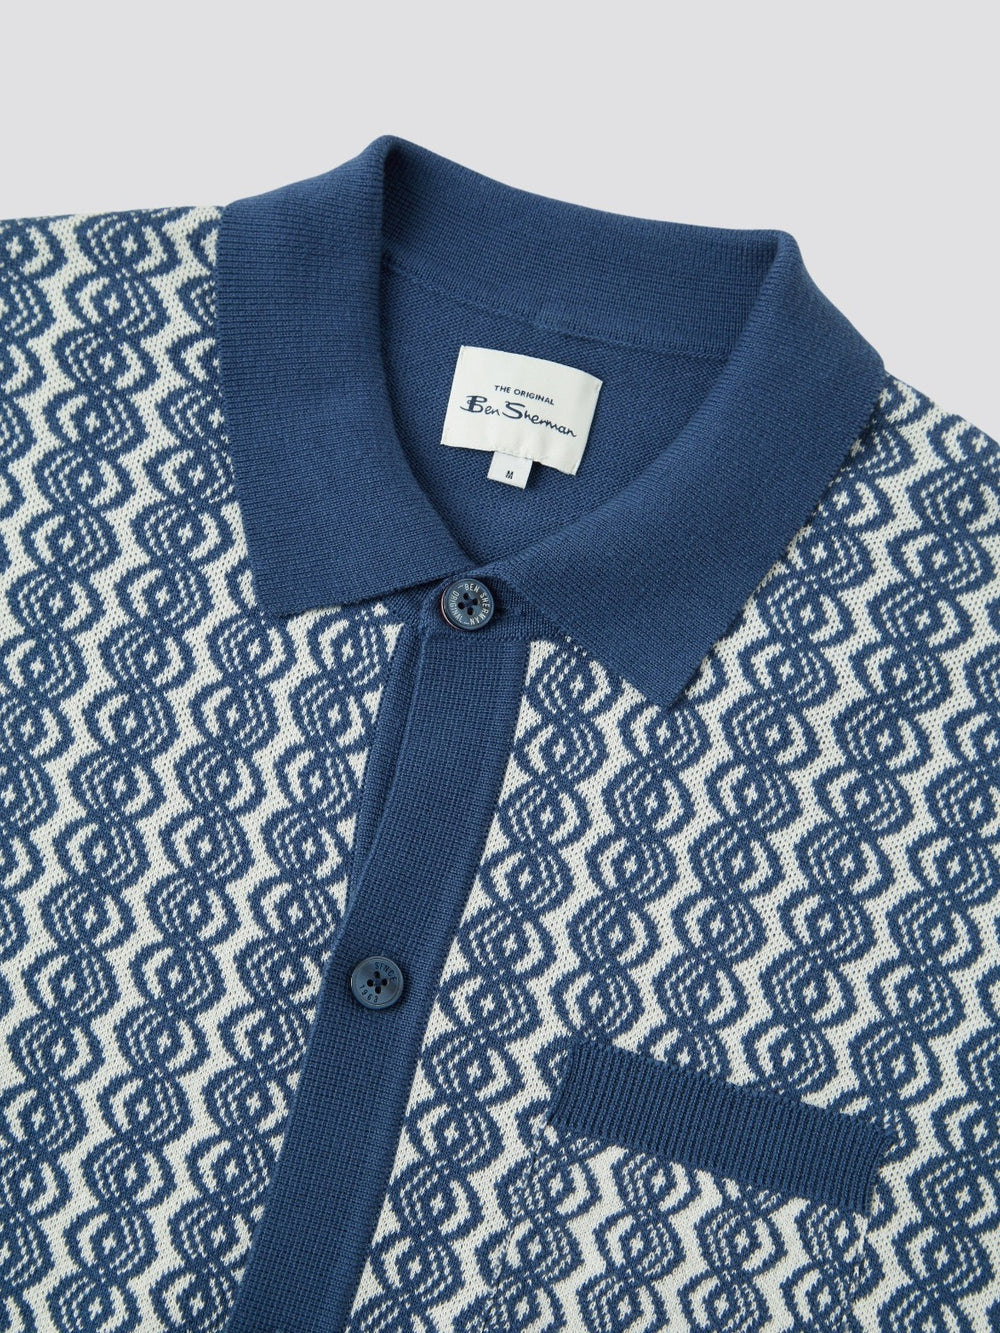 Ben Sherman, Geo Knit Polo, men's sweater polo, blue collar polo shirt, close up